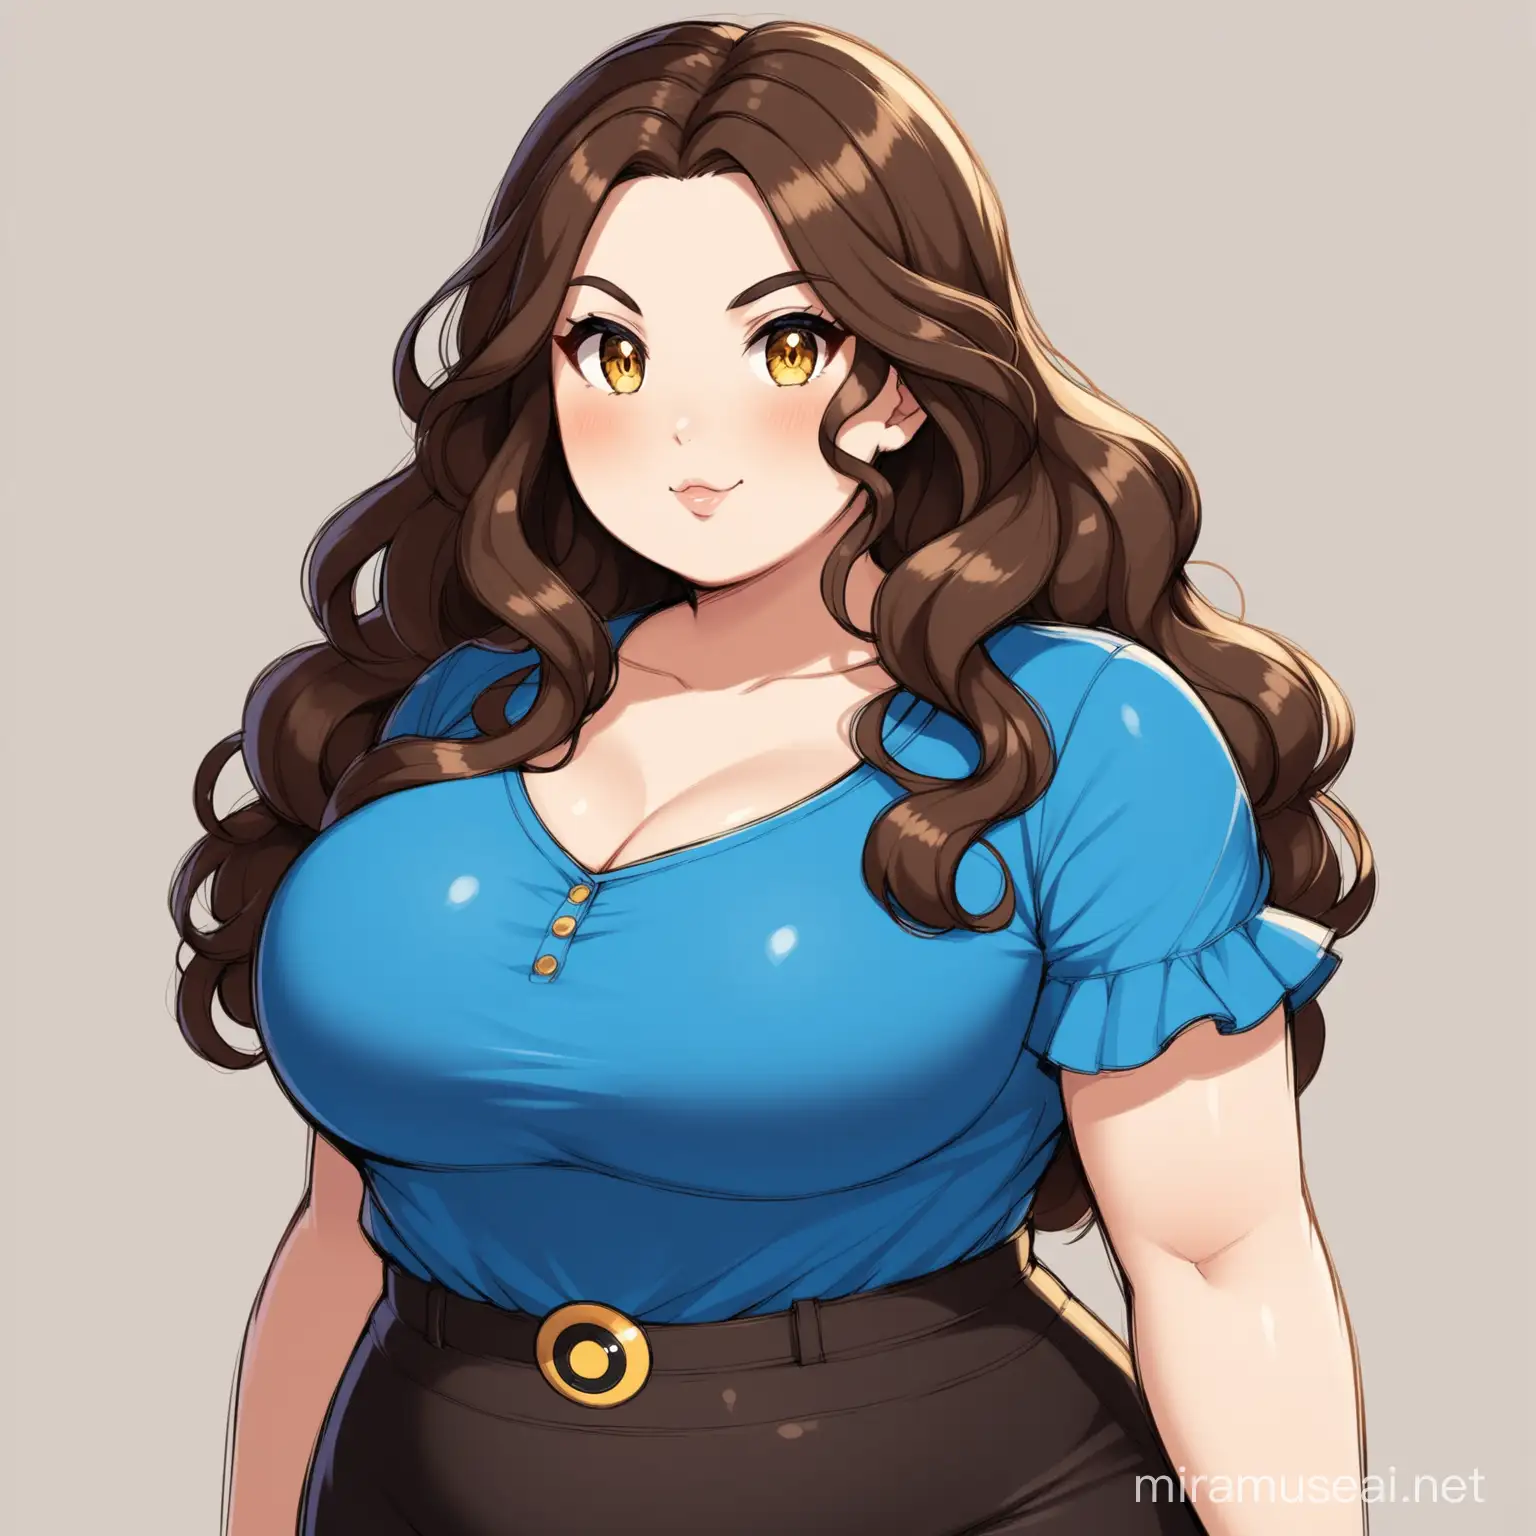 Plus sized woman, pokemon style, dark brown wavy hair, golden eyes, blue blouse